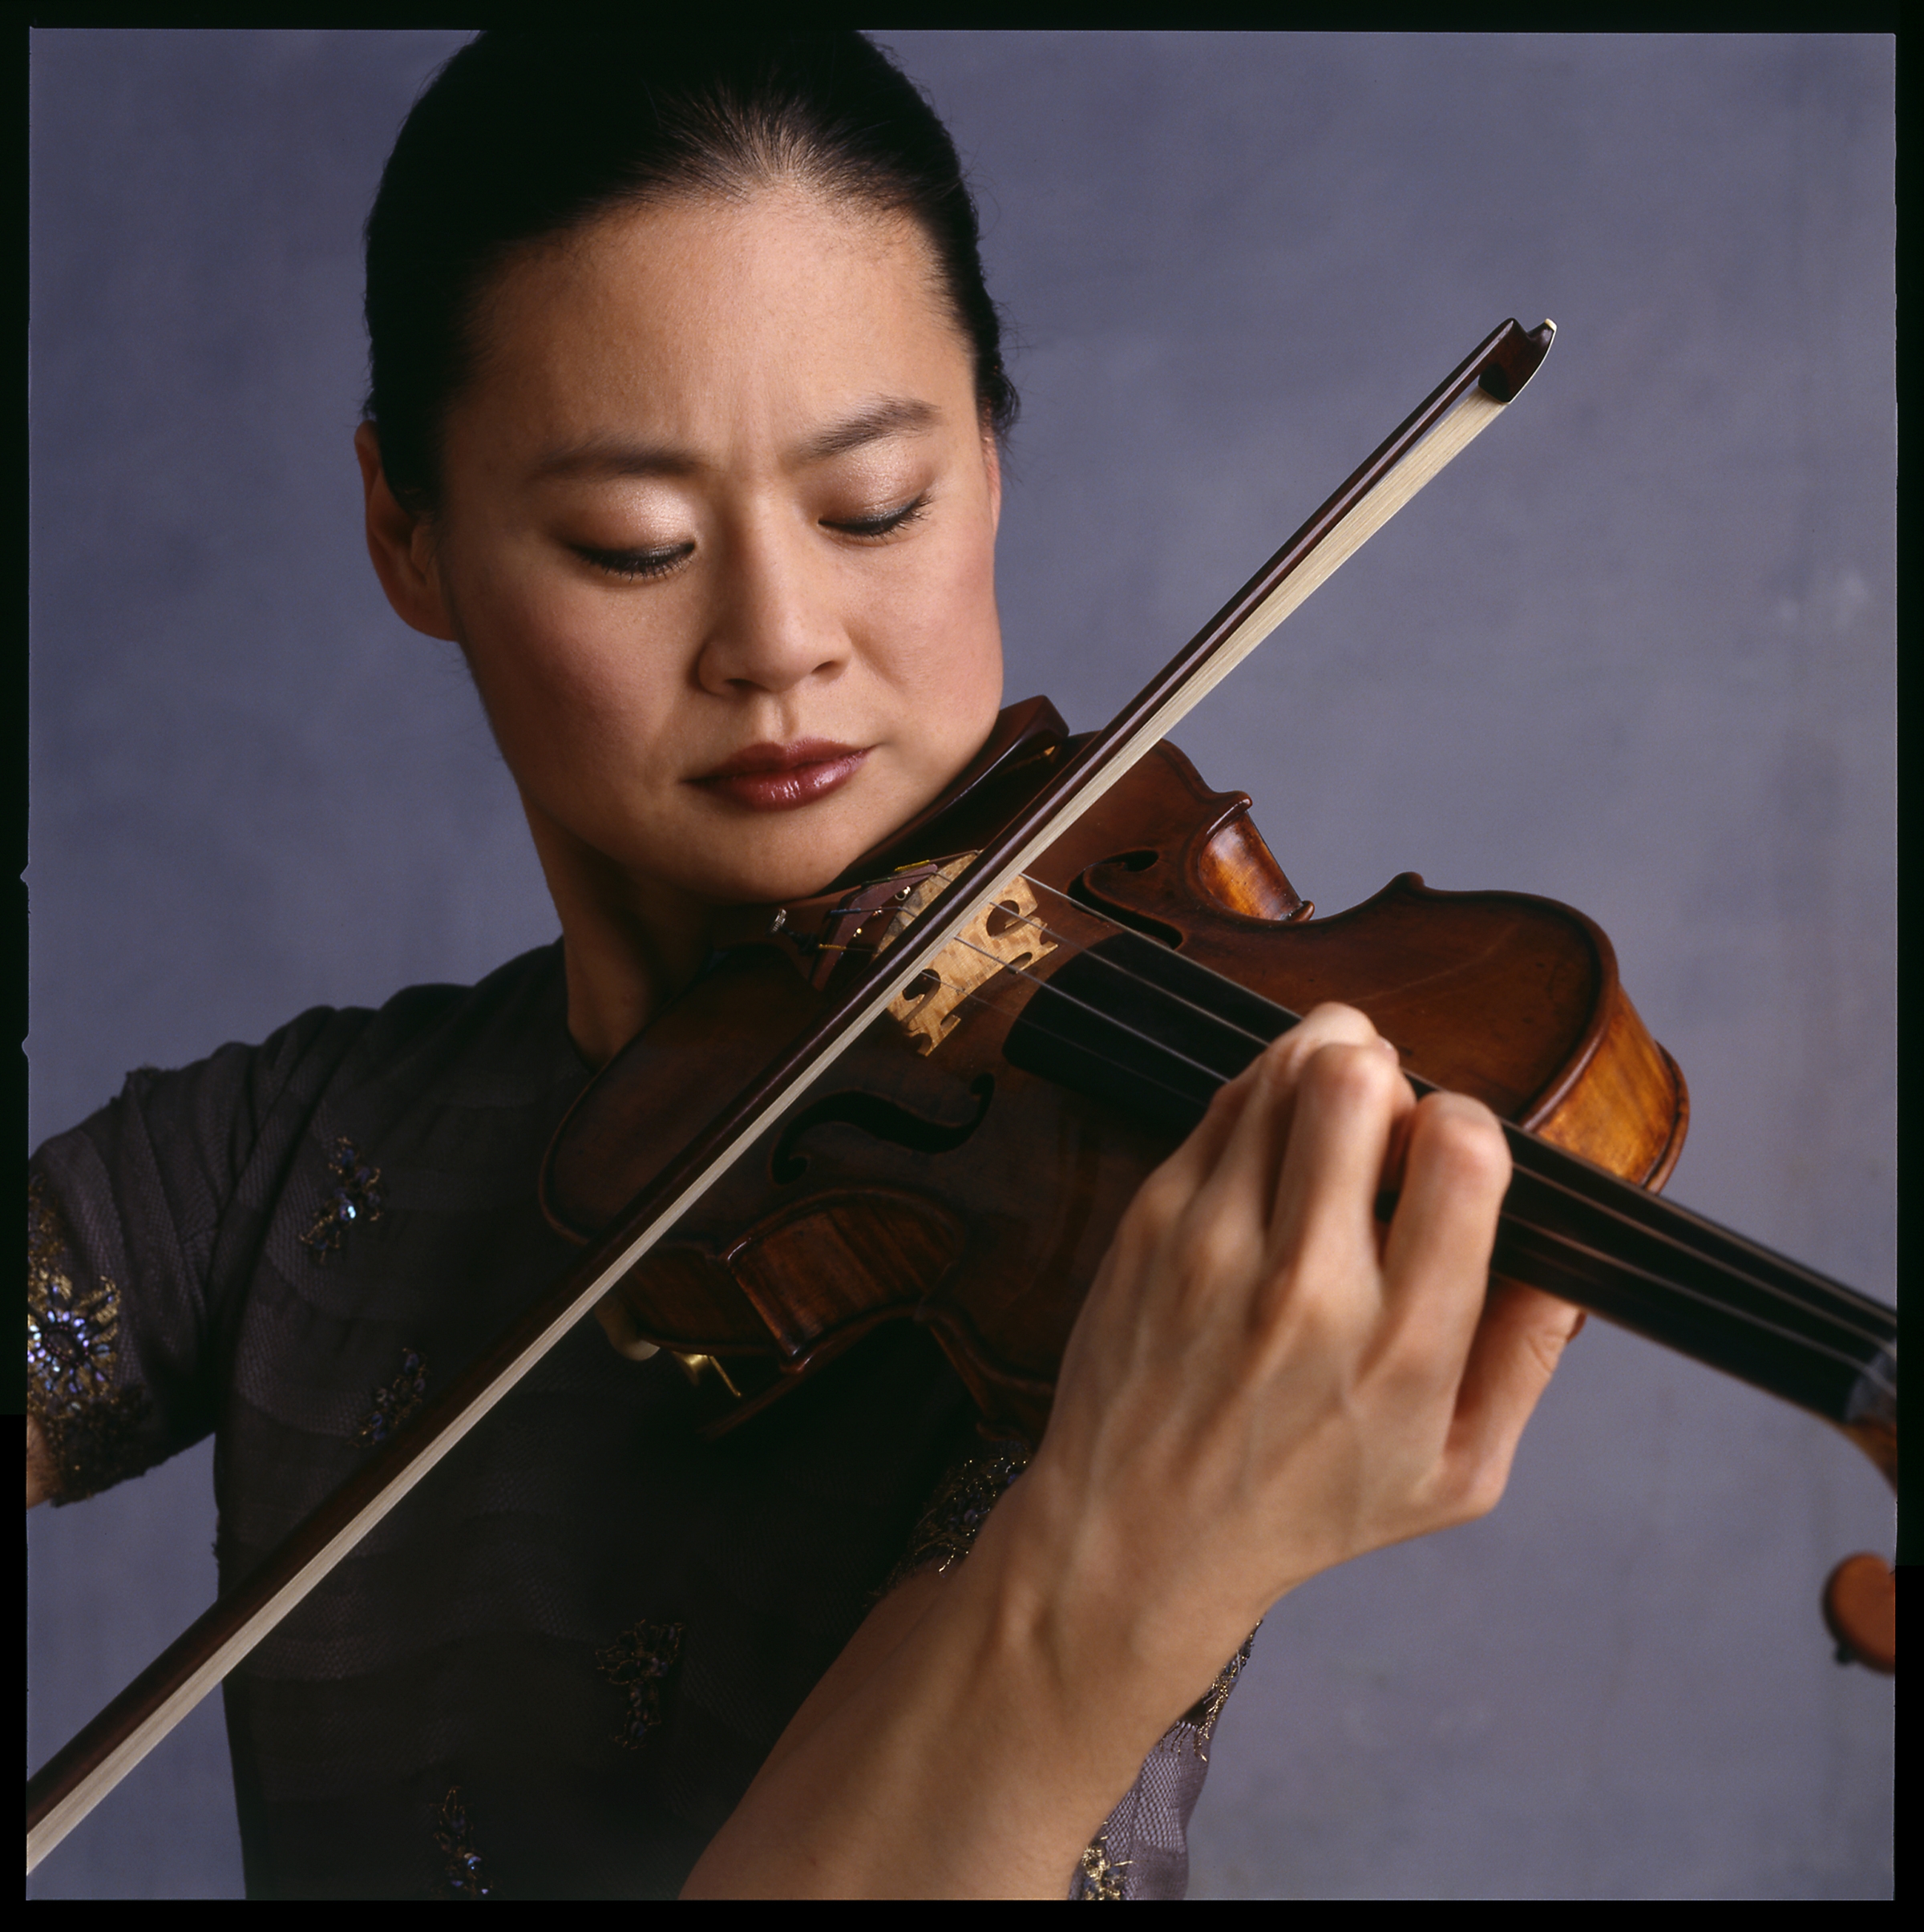 Violinist Midori. Photo credit: Timothy Greenfield-Sanders